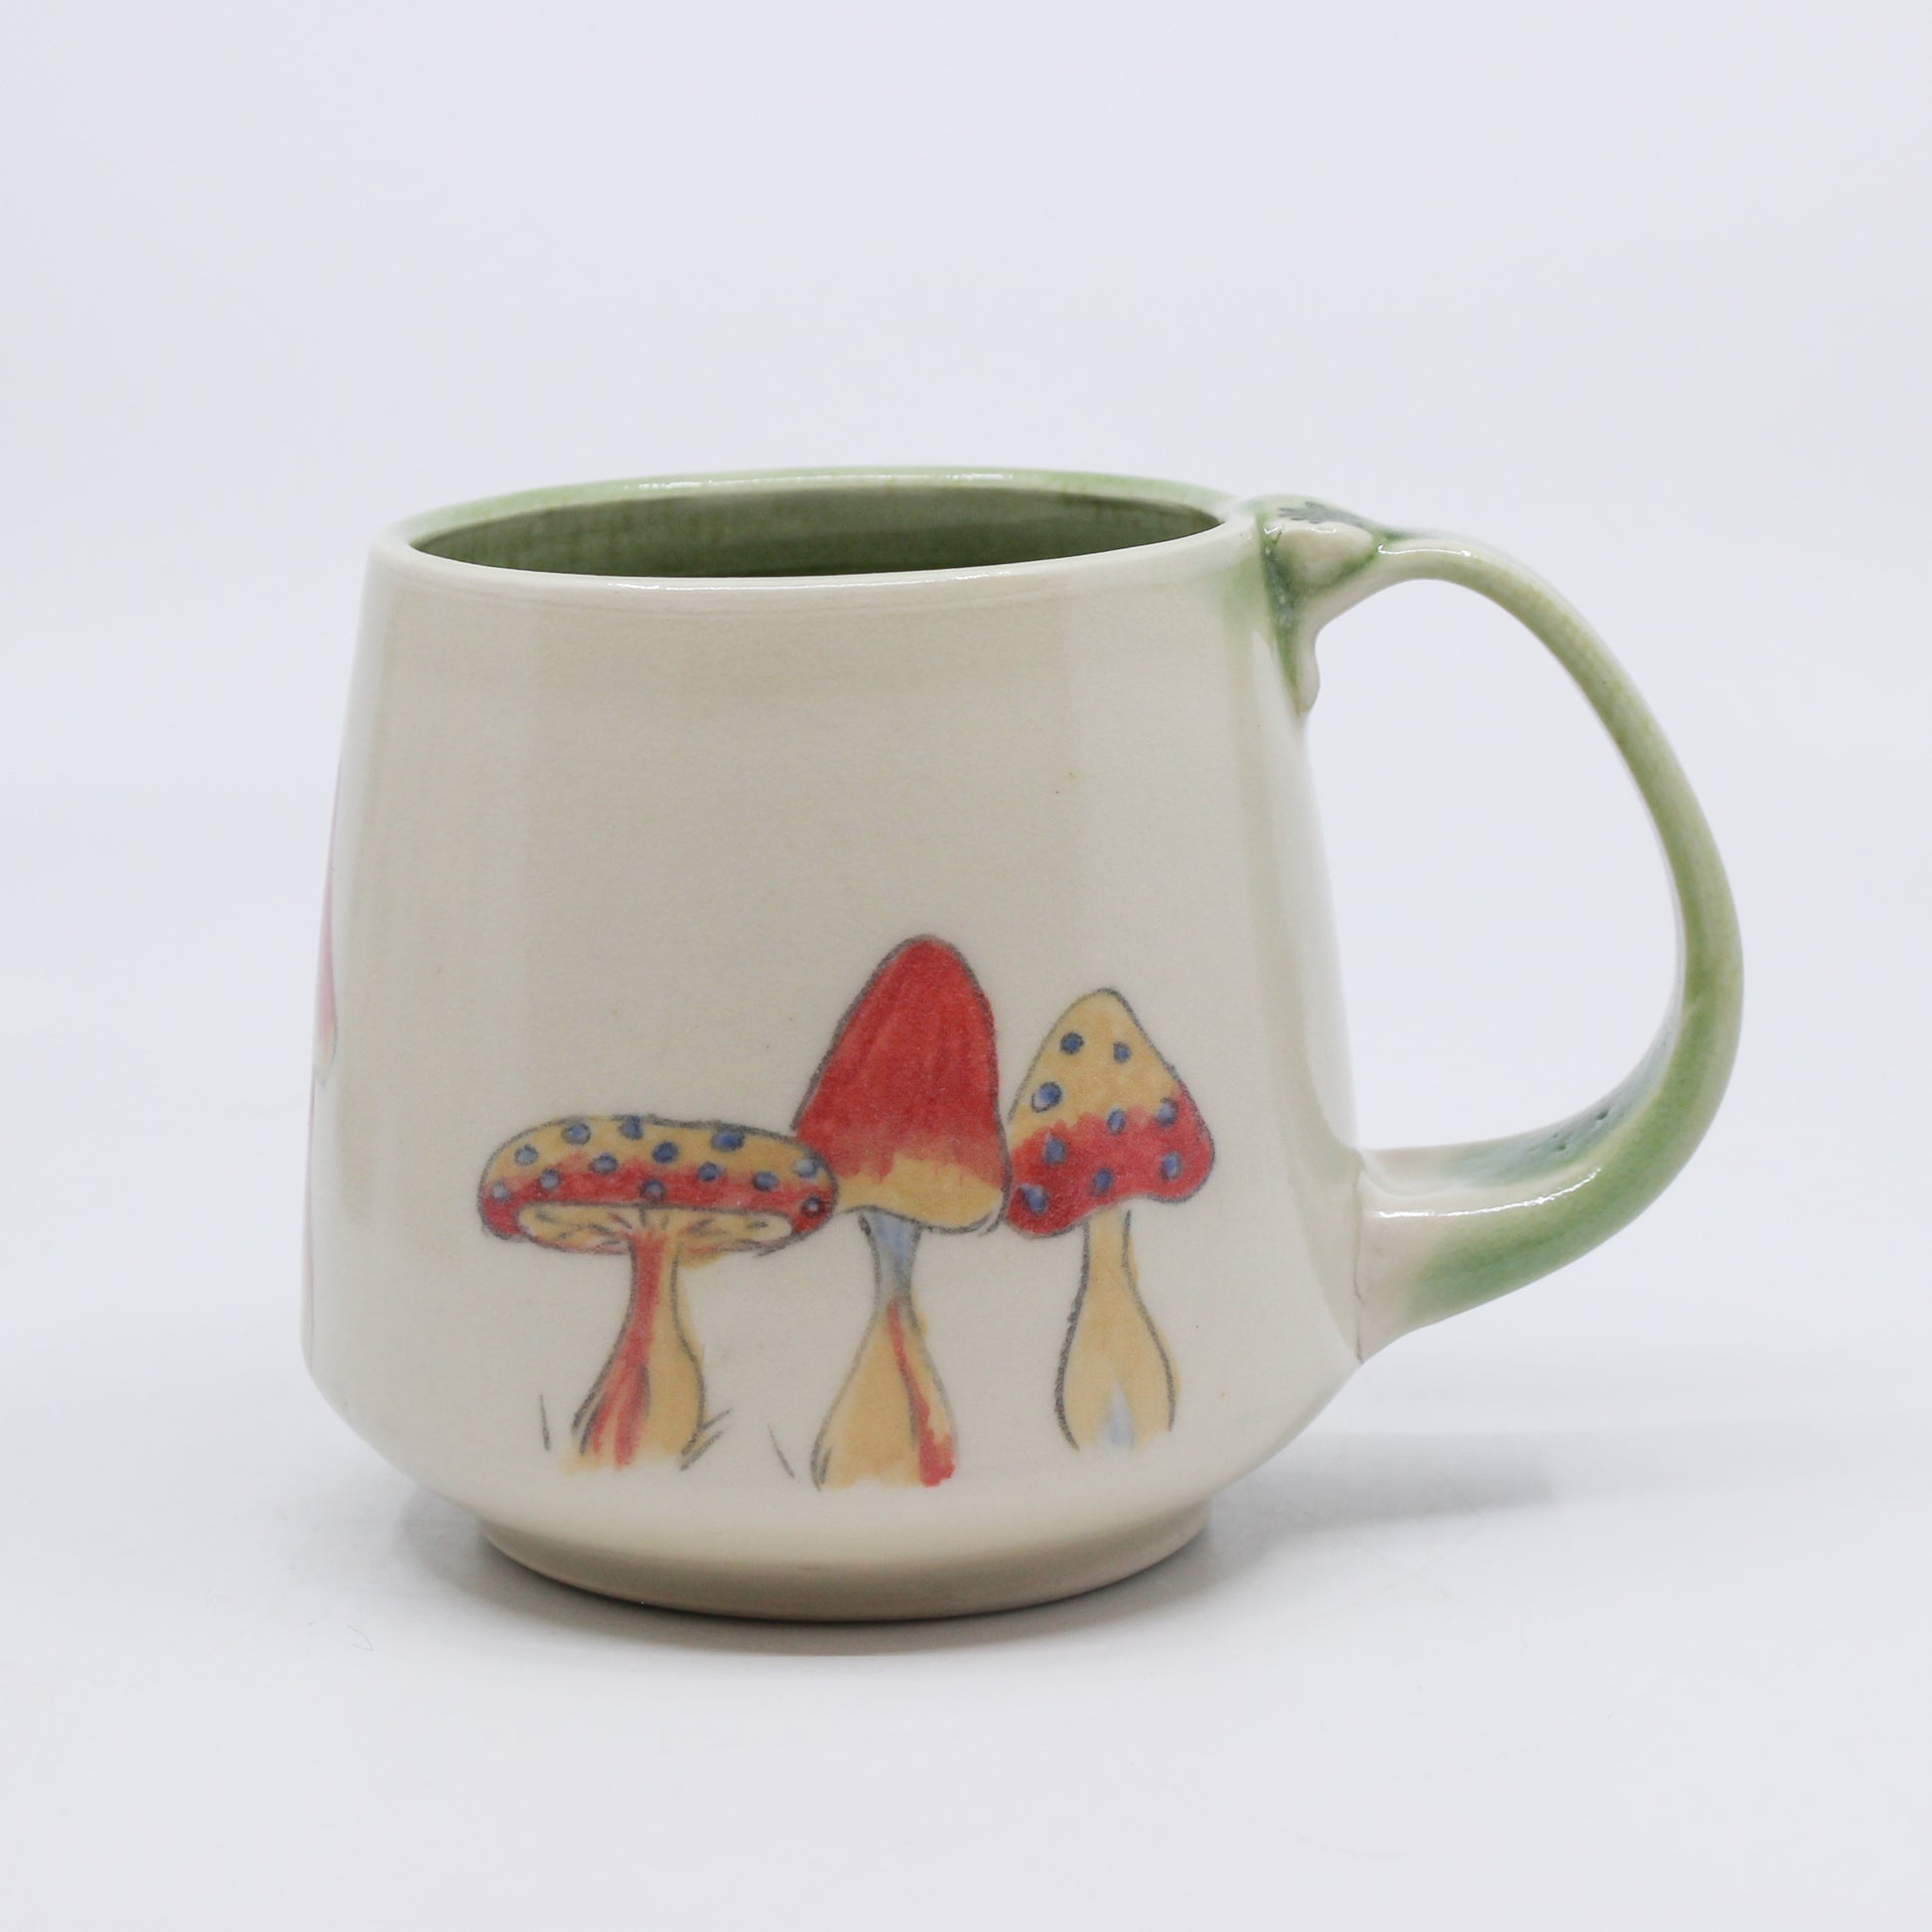 Hand-painted mushrooms on white and green mug